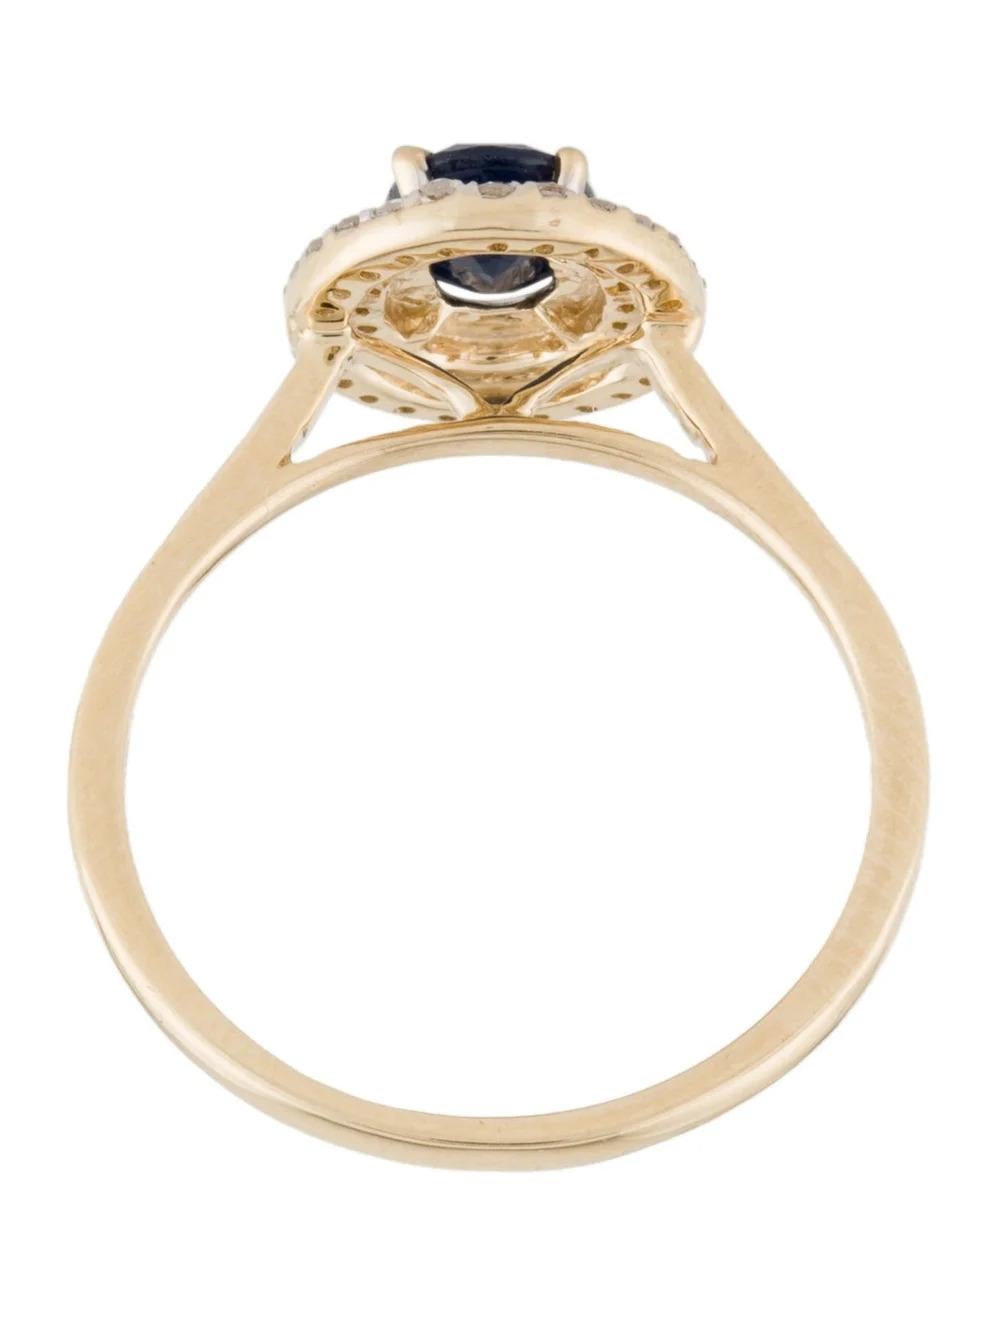 Women's 14K Sapphire & Diamond Cocktail Ring, Size 6.25 - Elegant Statement Jewelry For Sale